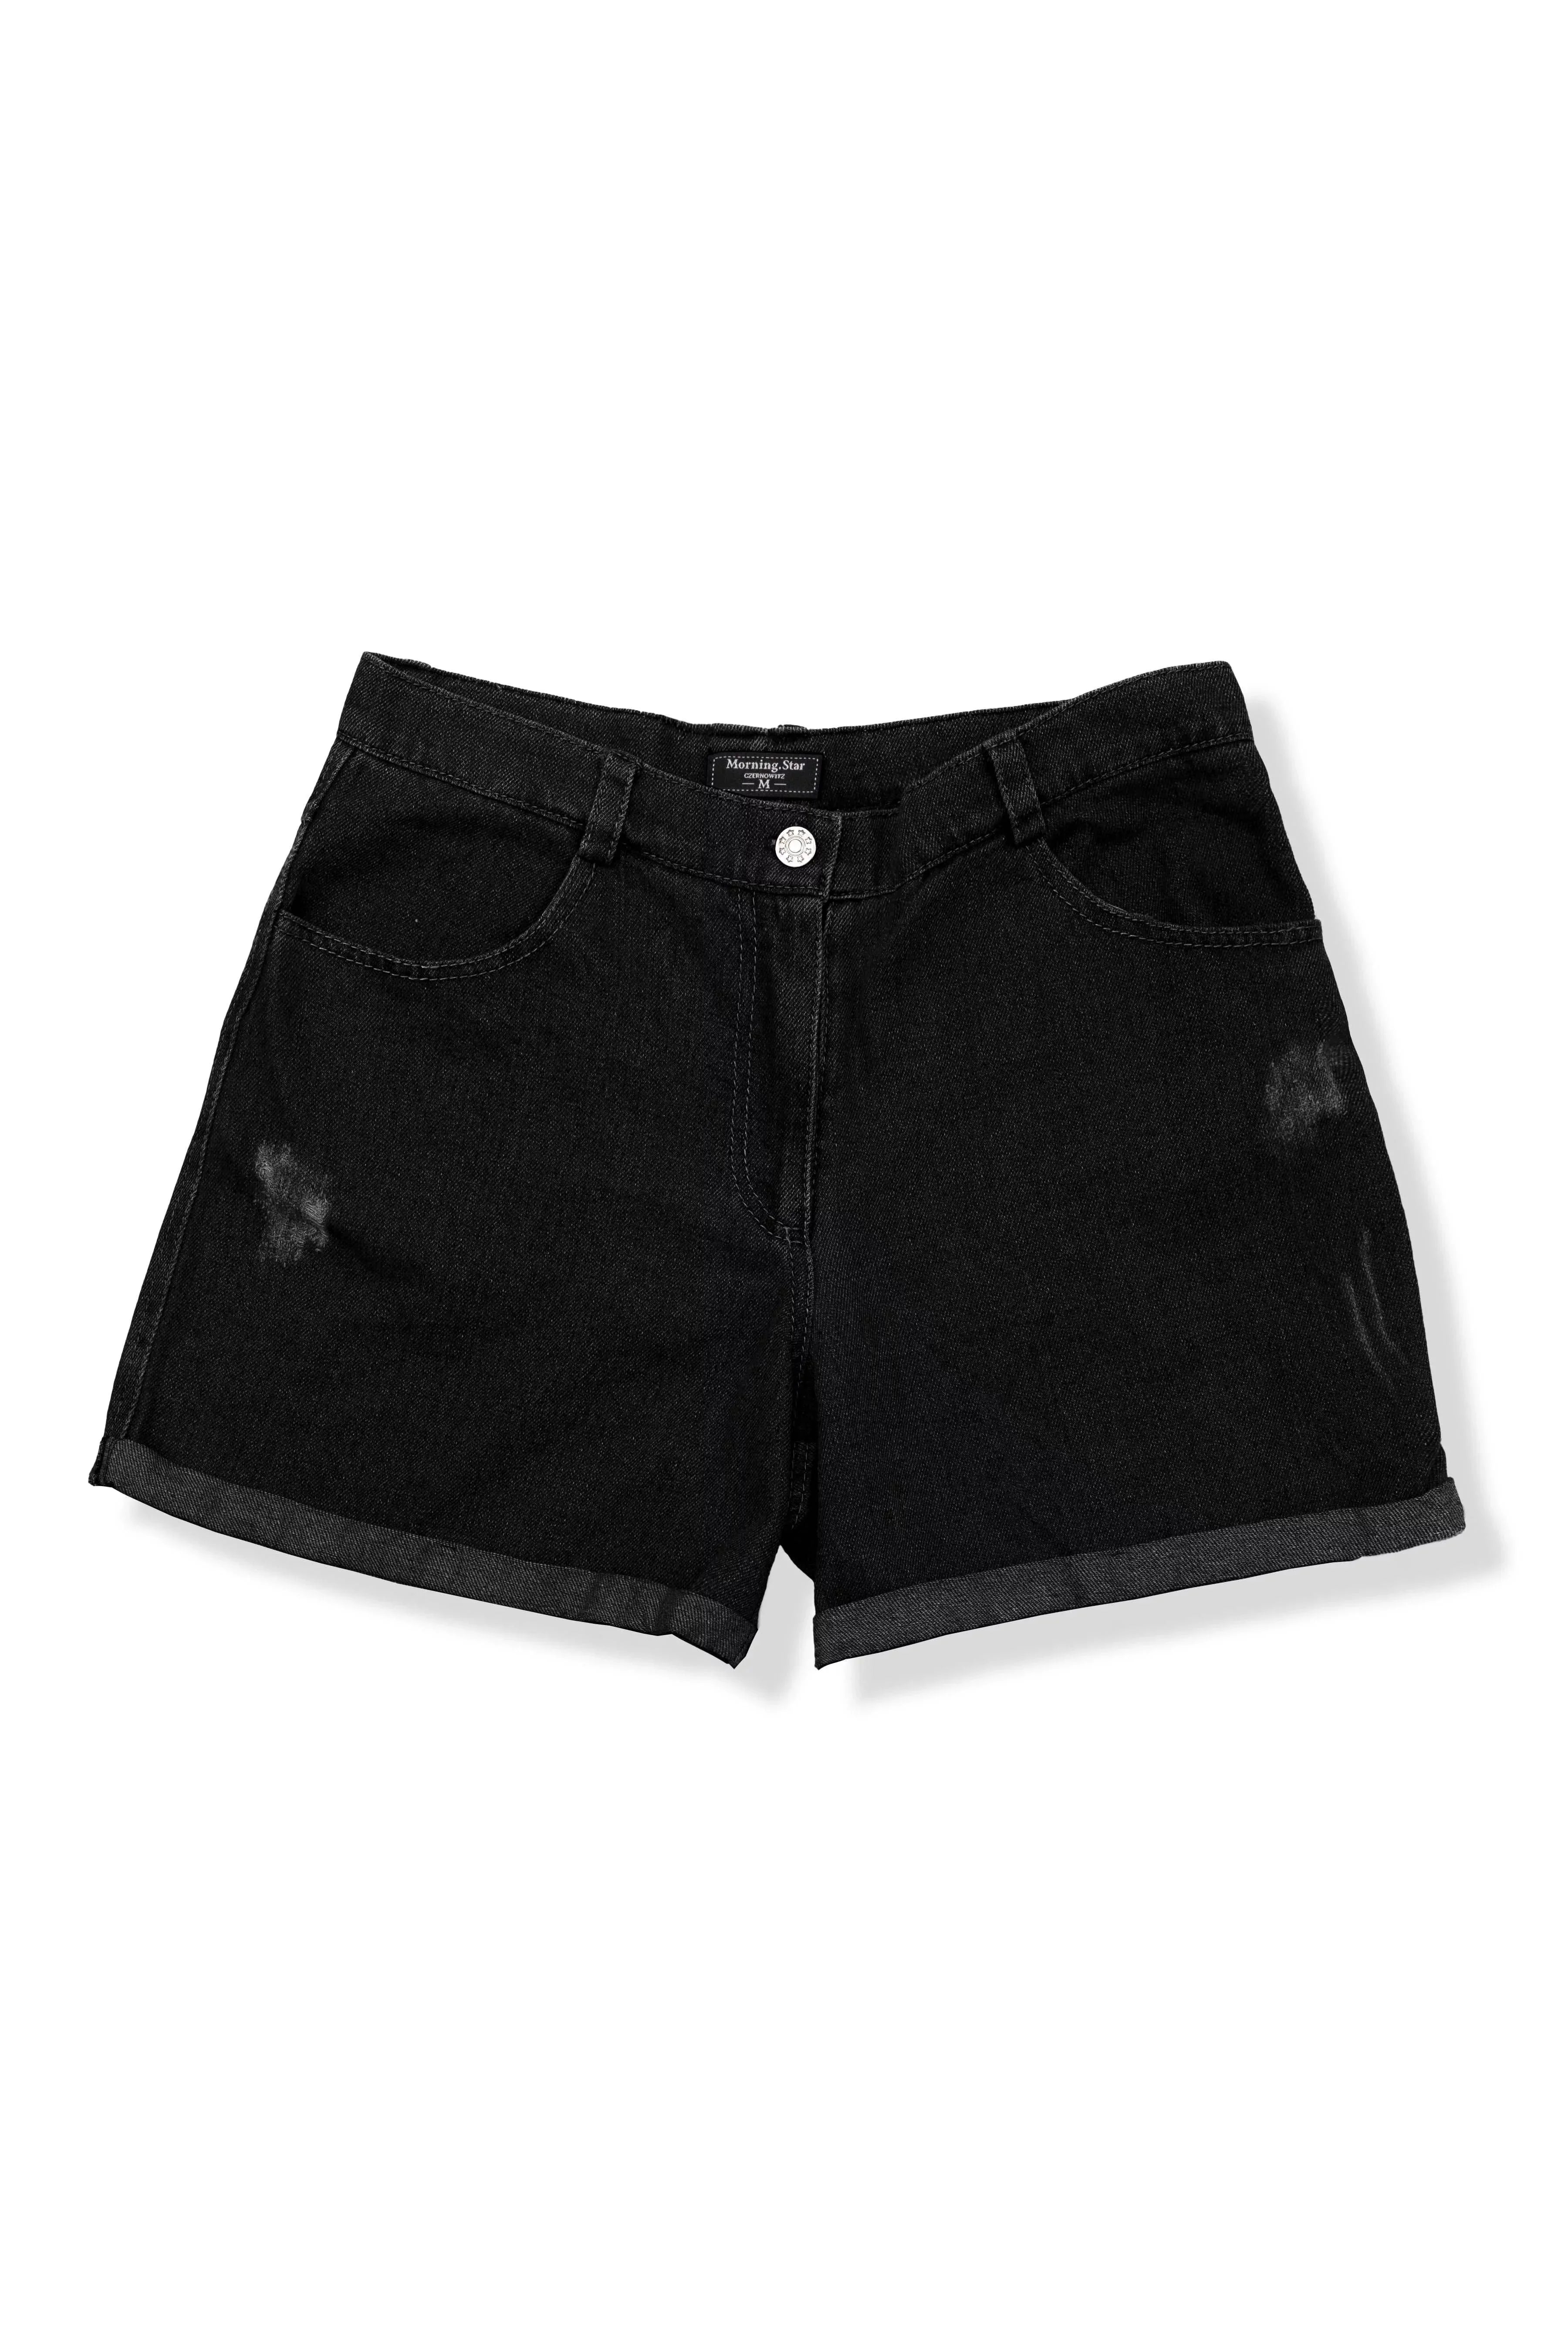 Women's black denim shorts - Morning Star